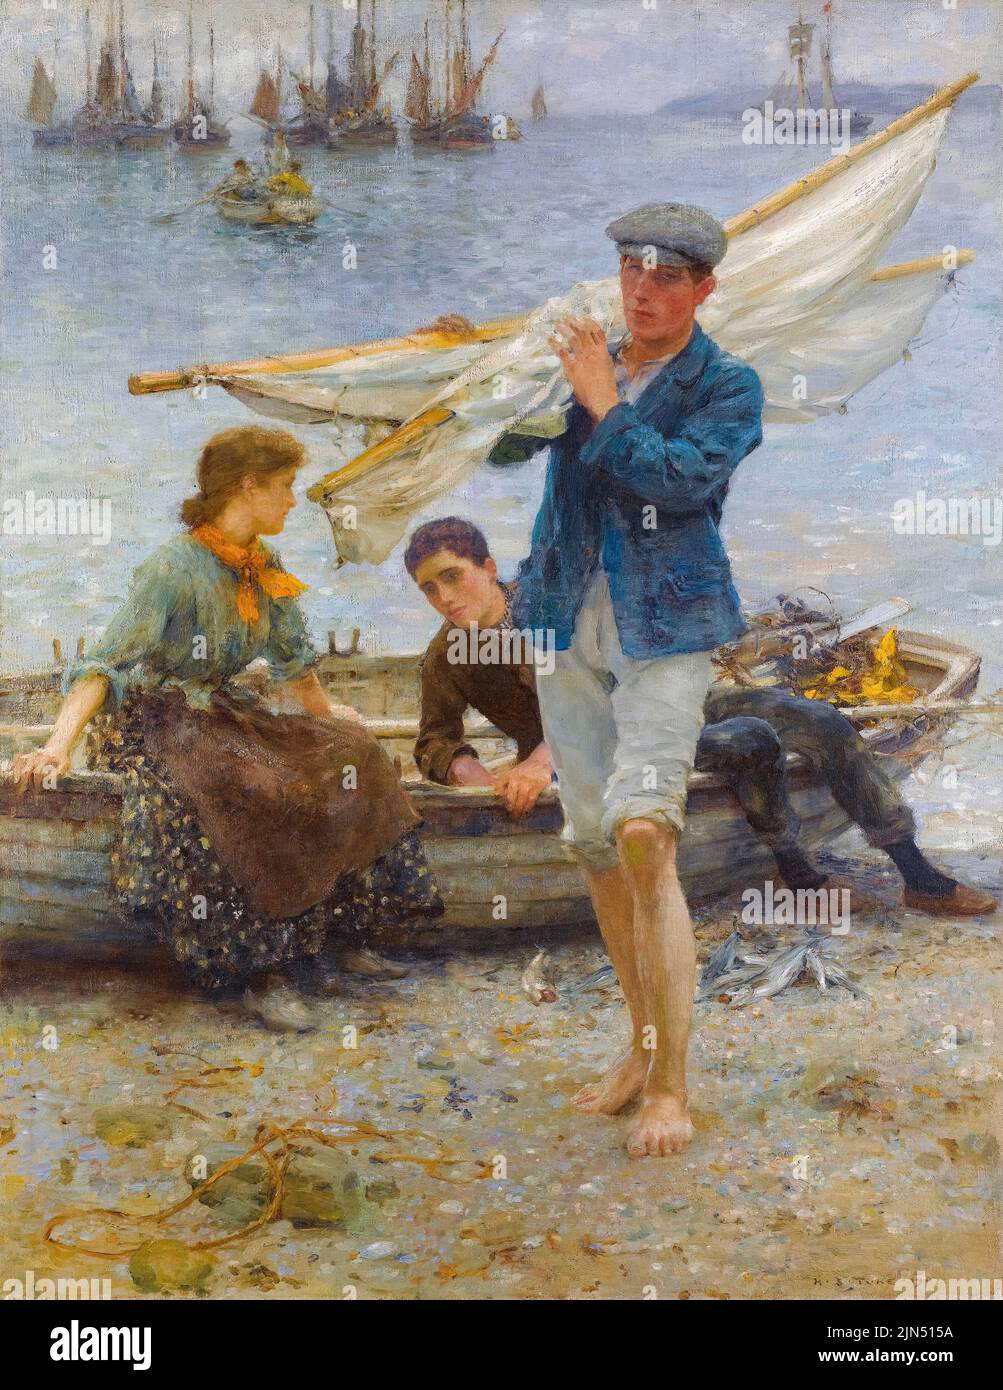 Henry Scott Tuke, Return from Fishing, painting in oil on canvas, 1907 Stock Photo